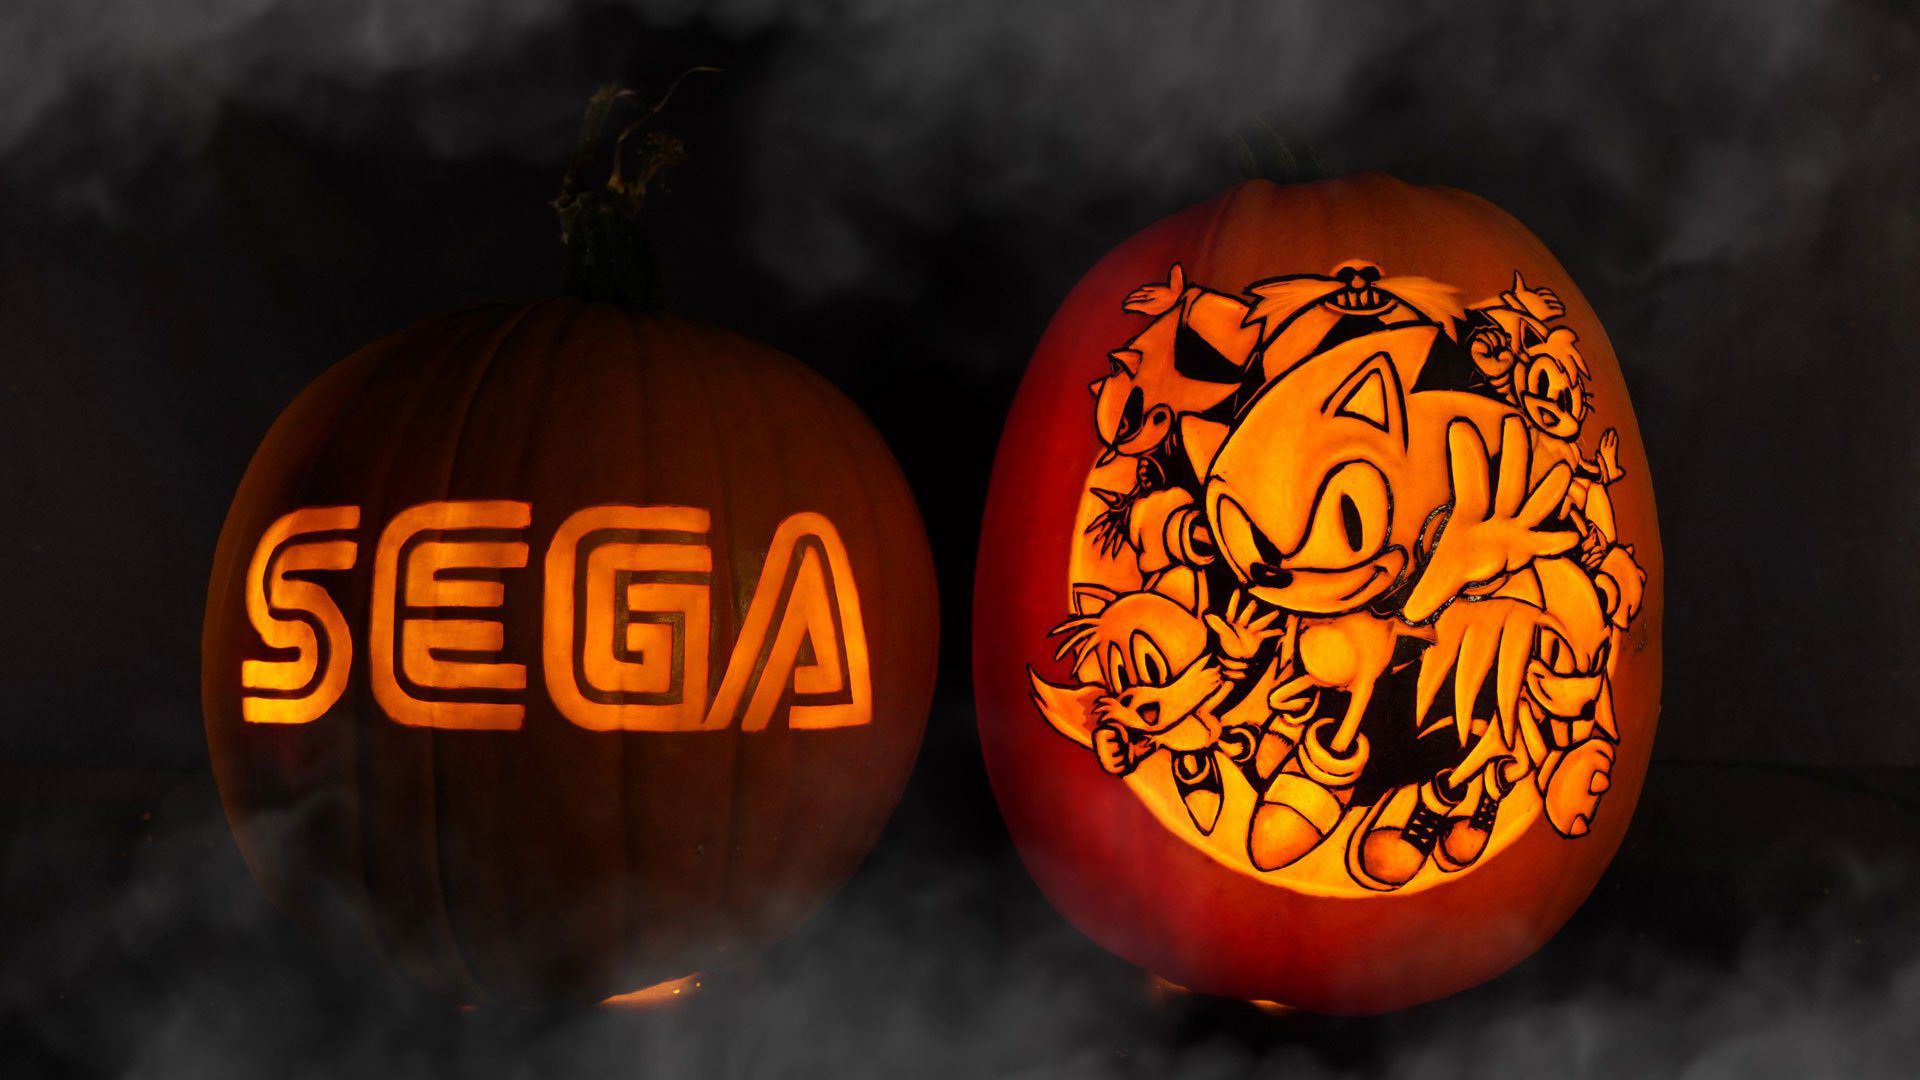 Video game Jack-o-lanterns will make your Halloween